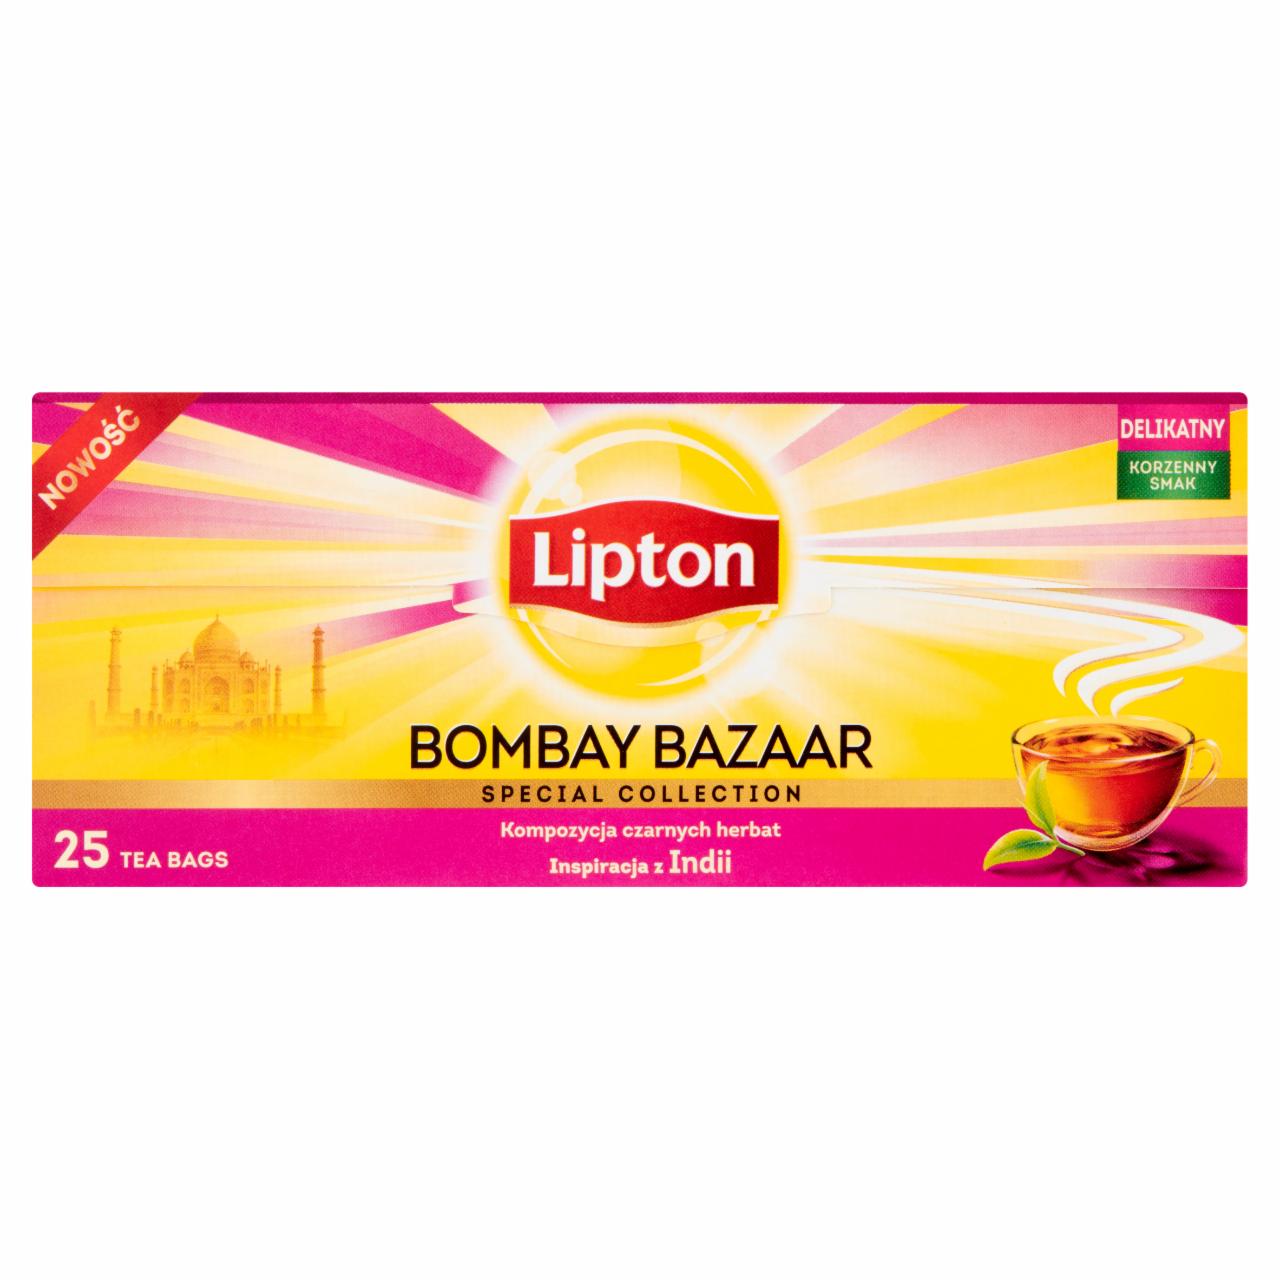 Zdjęcia - Lipton Special Collection Bombay Bazaar Herbata czarna 45 g (25 torebek)